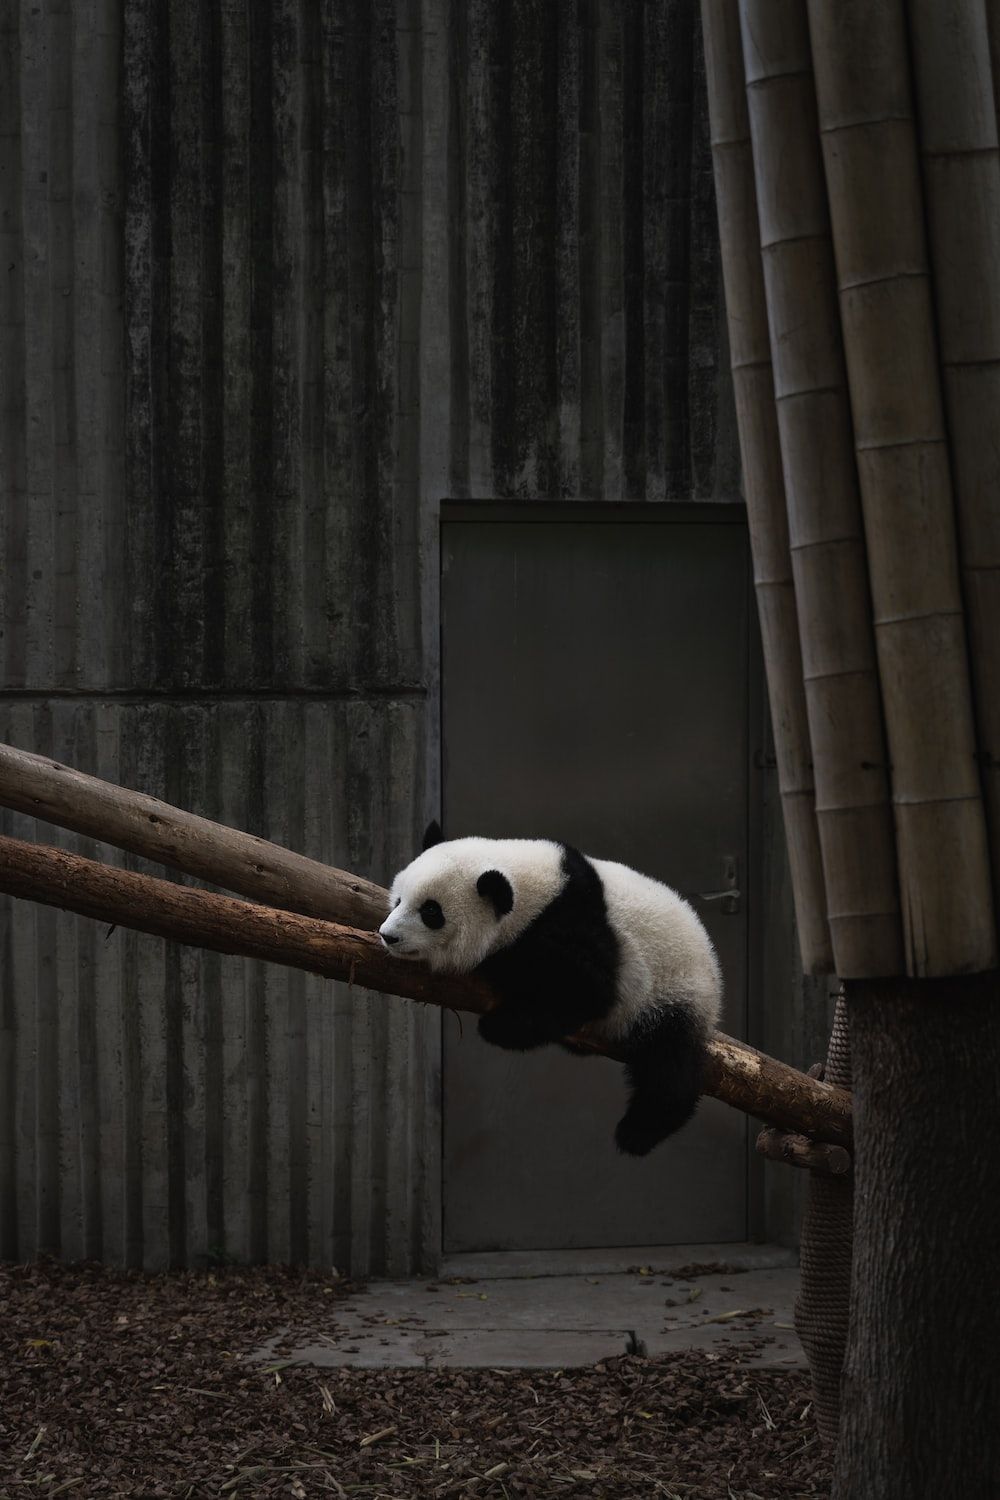 A panda bear sitting on a tree branch - Panda